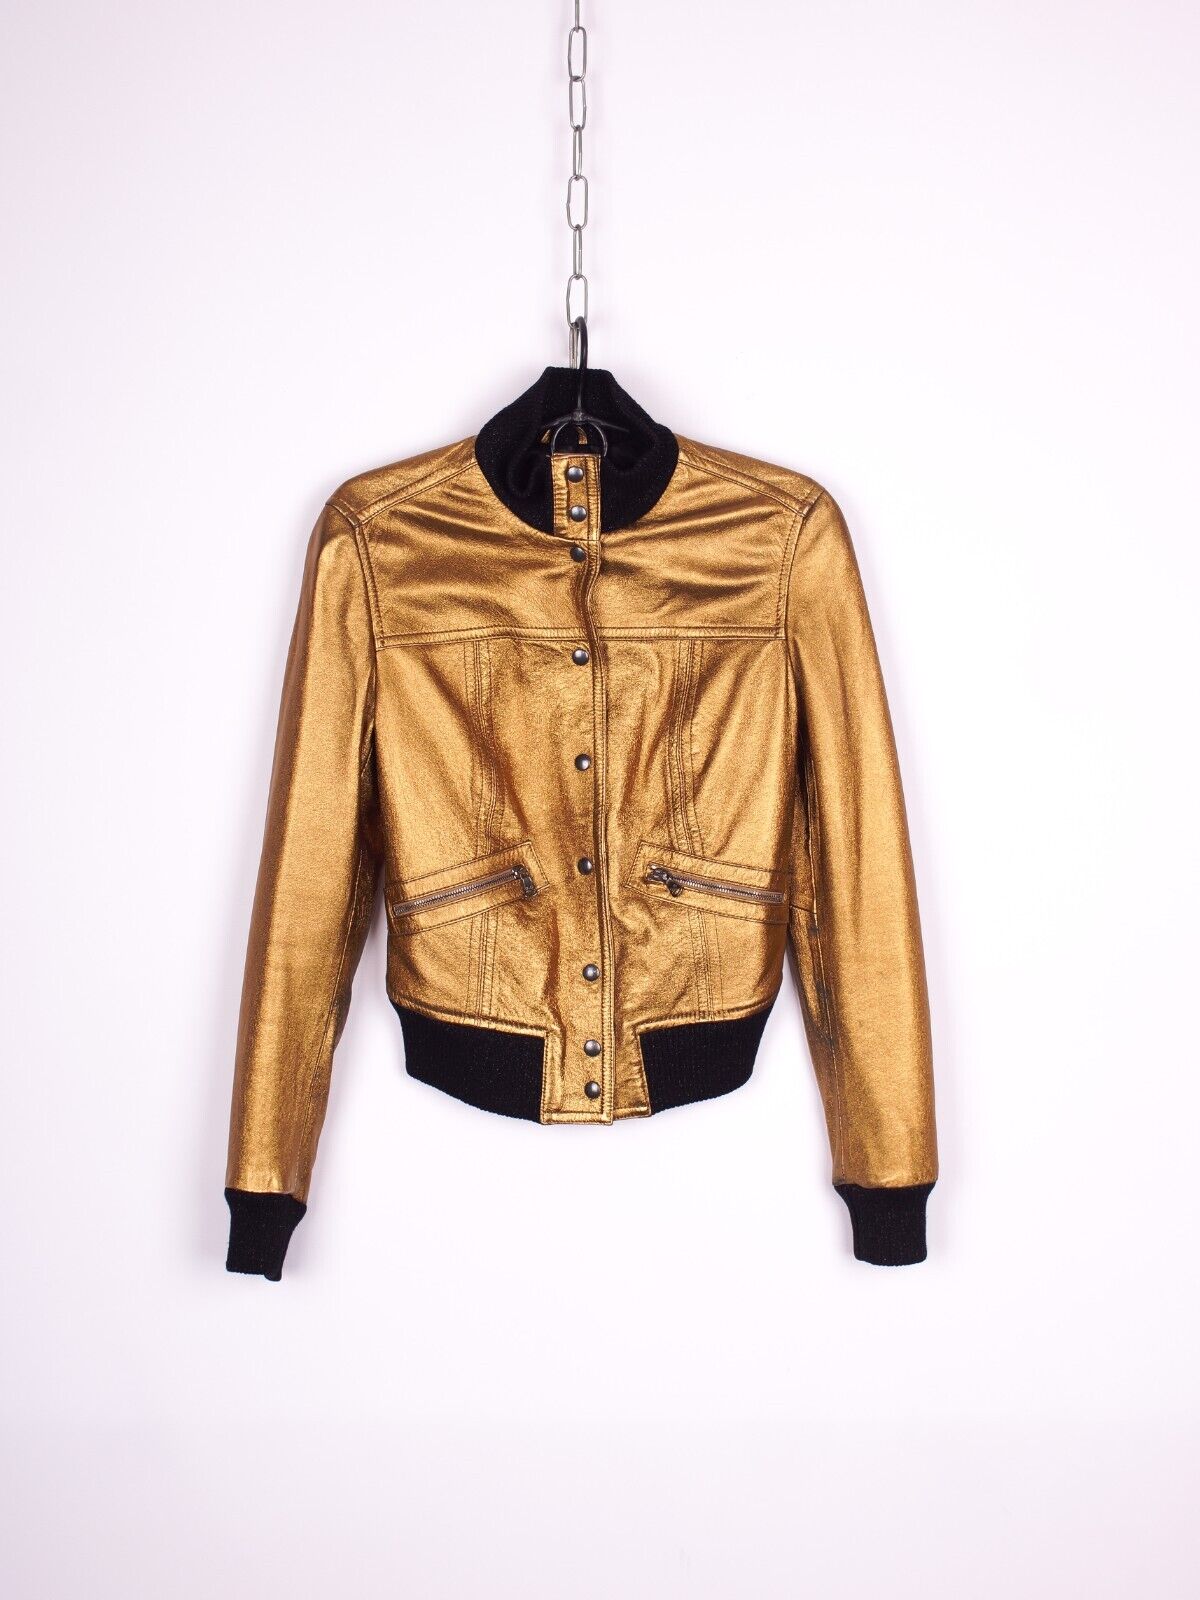 Women's Dolce & Gabbana Gold Leather Jacket Size EU 42 | eBay